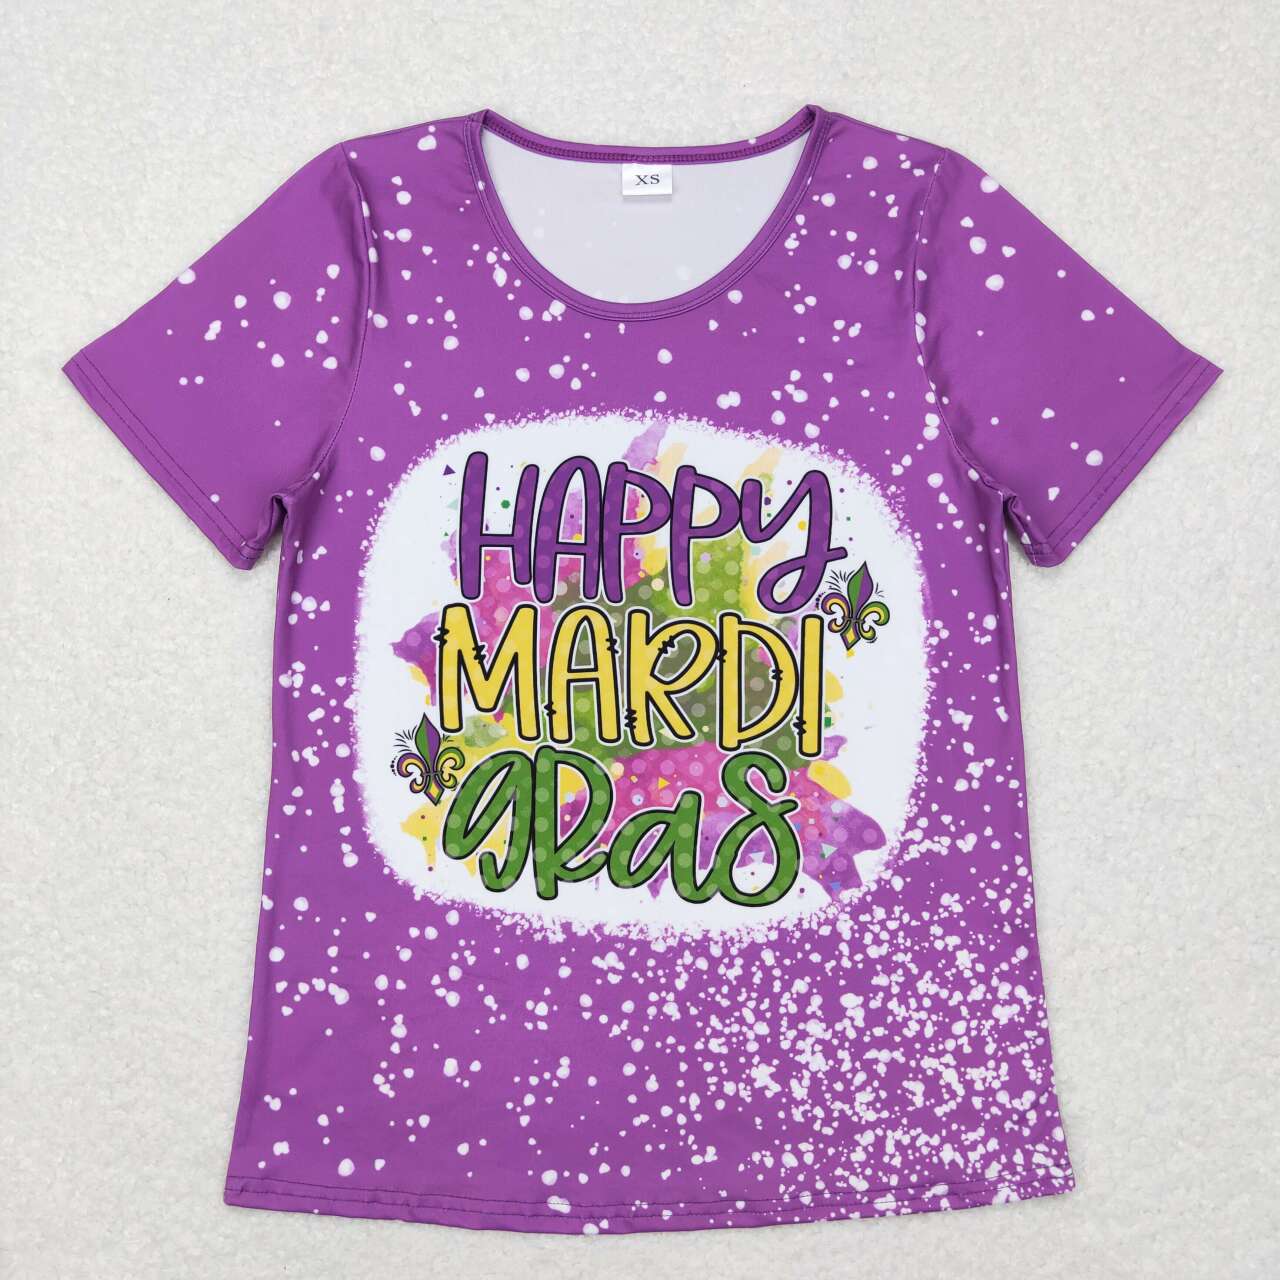 GT0377 Adult Purple Happy Mardi Gras Woman Tee Shirts Top